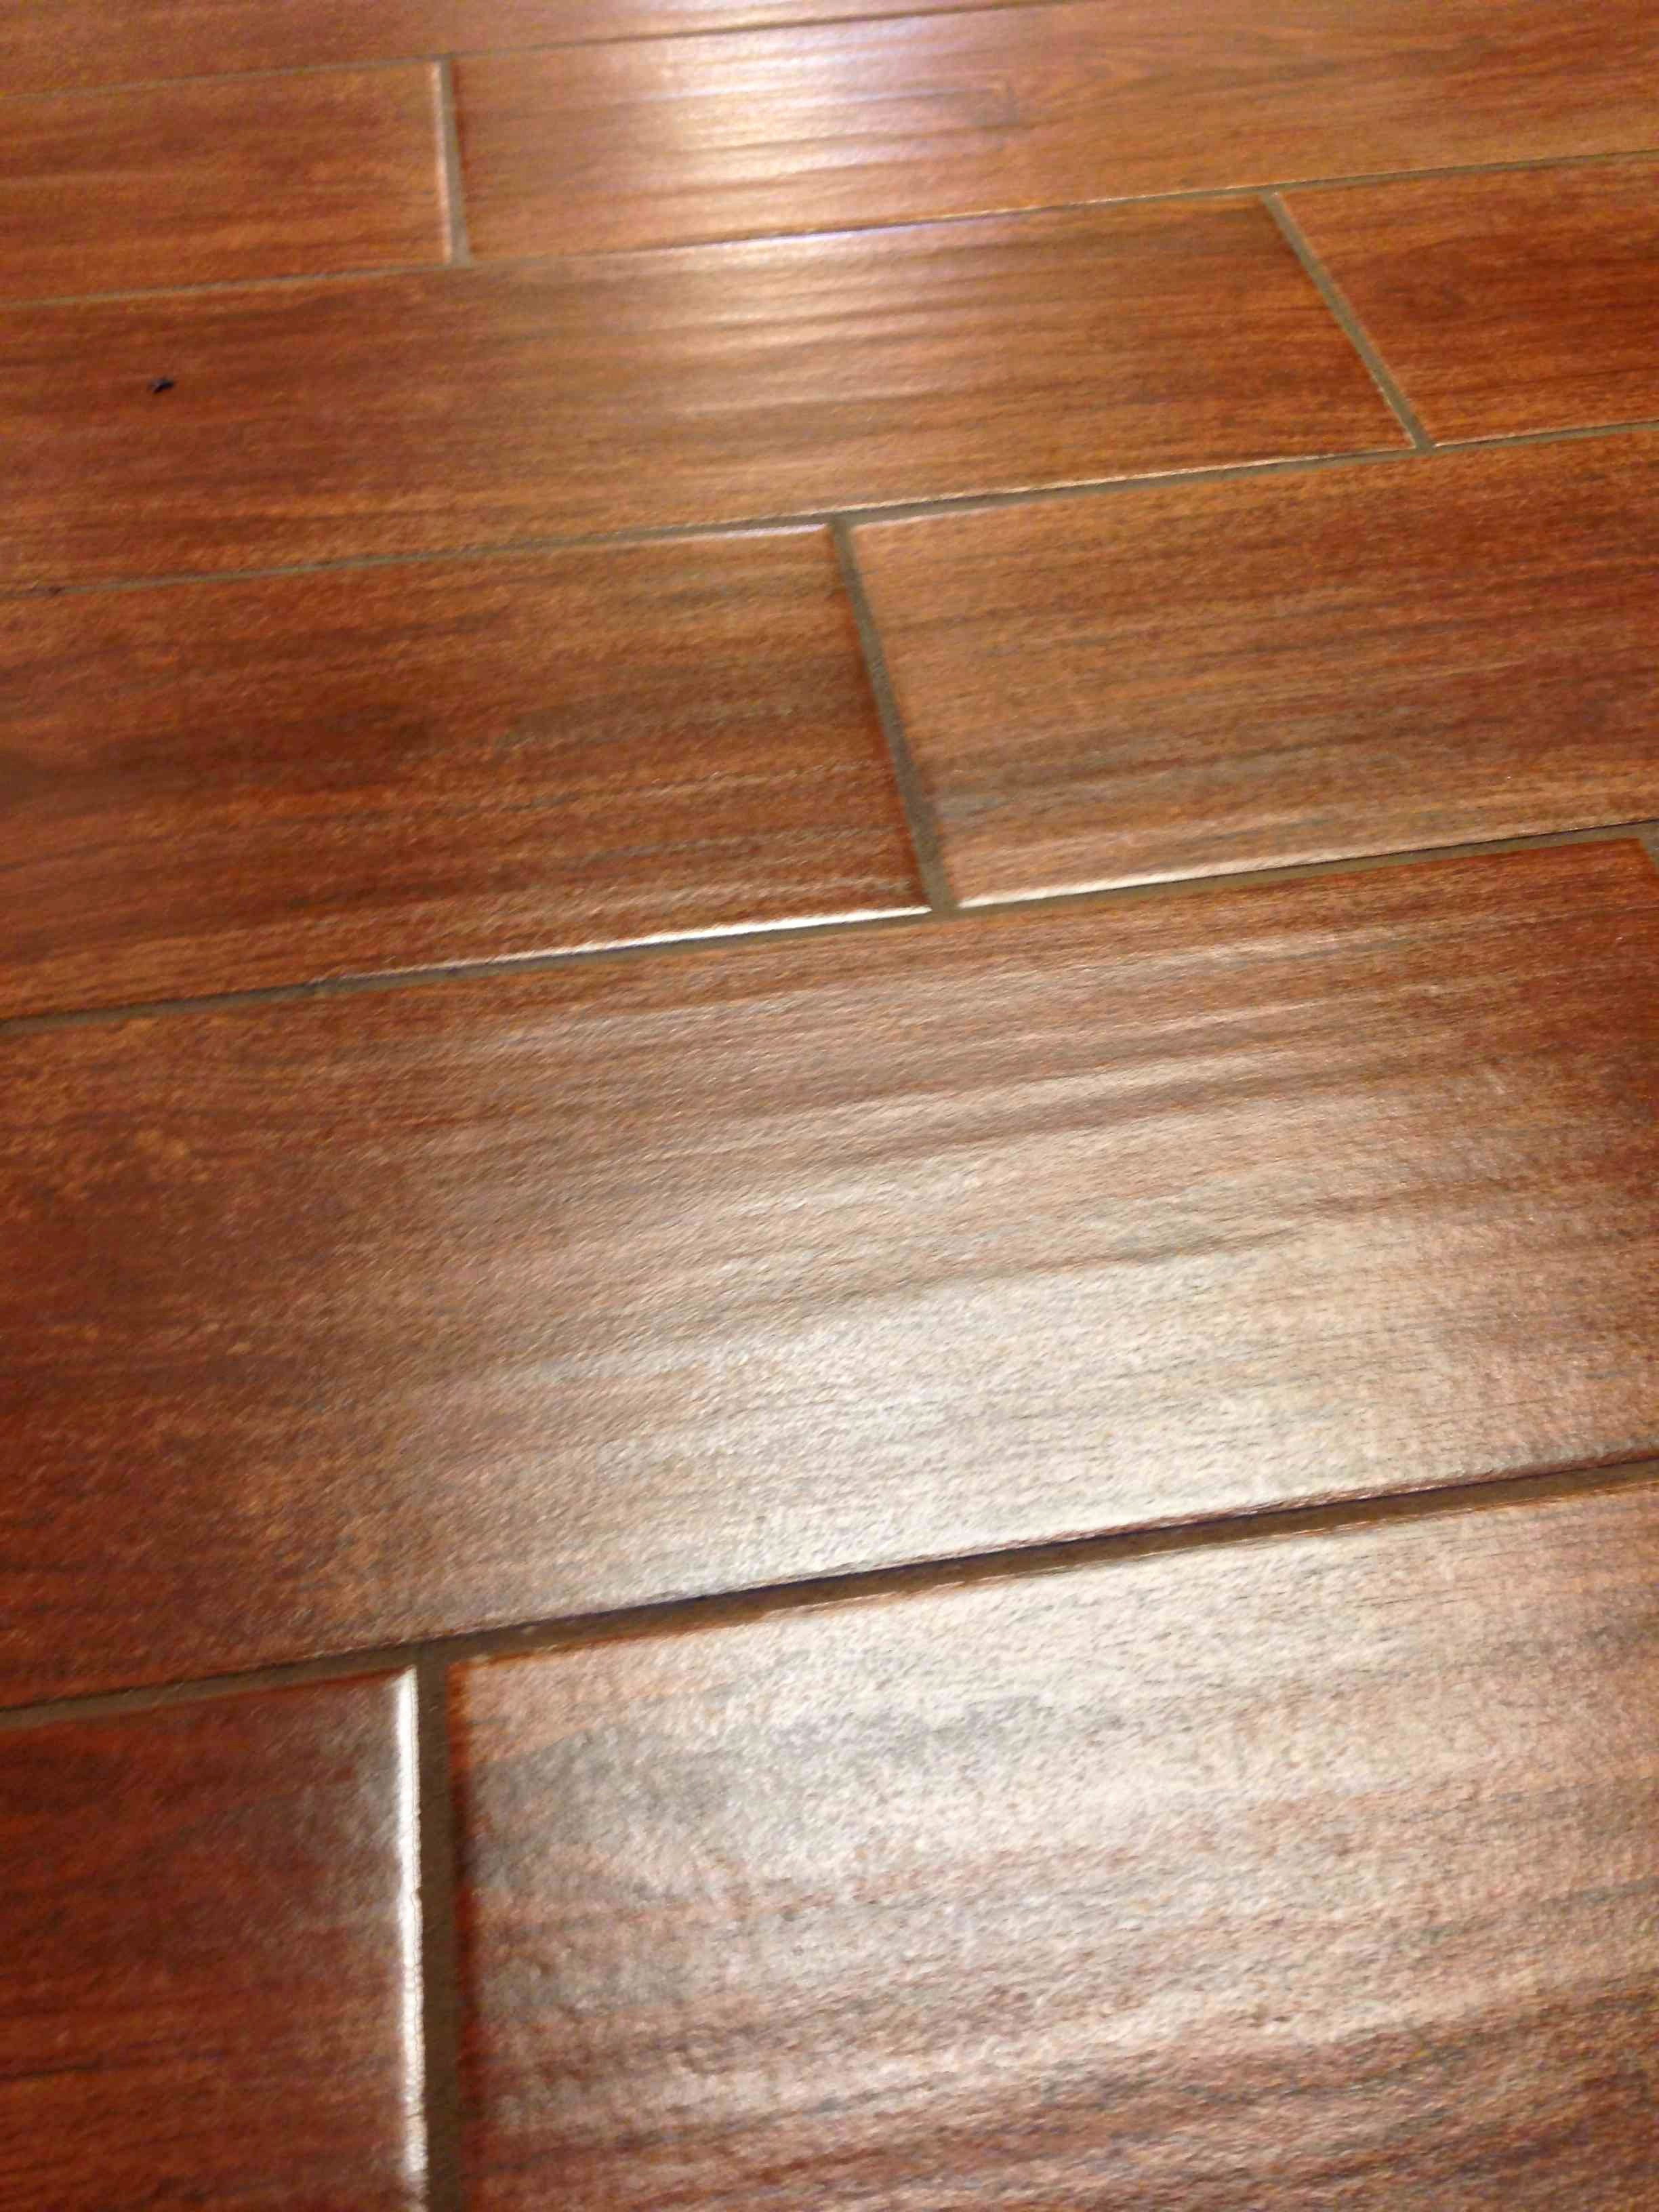 10 Fantastic Prefinished Hardwood Flooring for Sale 2022 free download prefinished hardwood flooring for sale of 18 fresh hardwood collection dizpos com inside hardwood best of prefinished wood flooring gallery